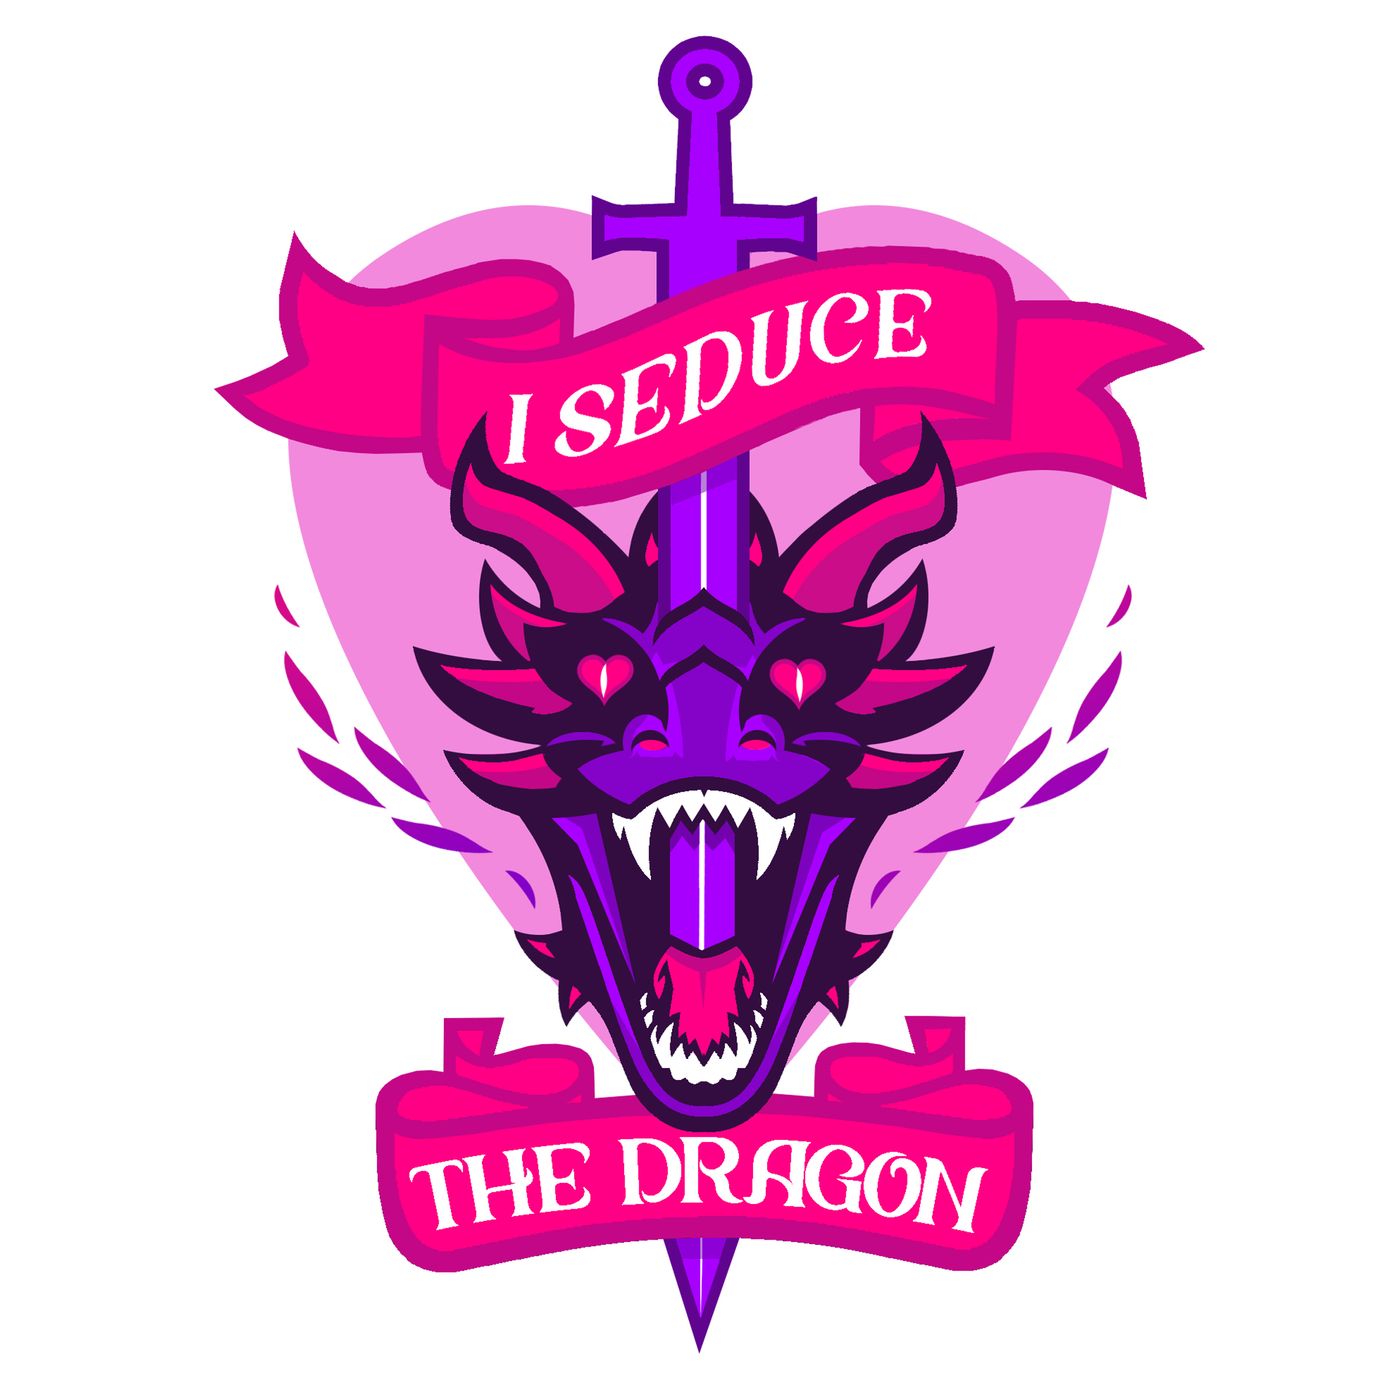 GUEST EPISODE: I Seduce The Dragon Episode 1